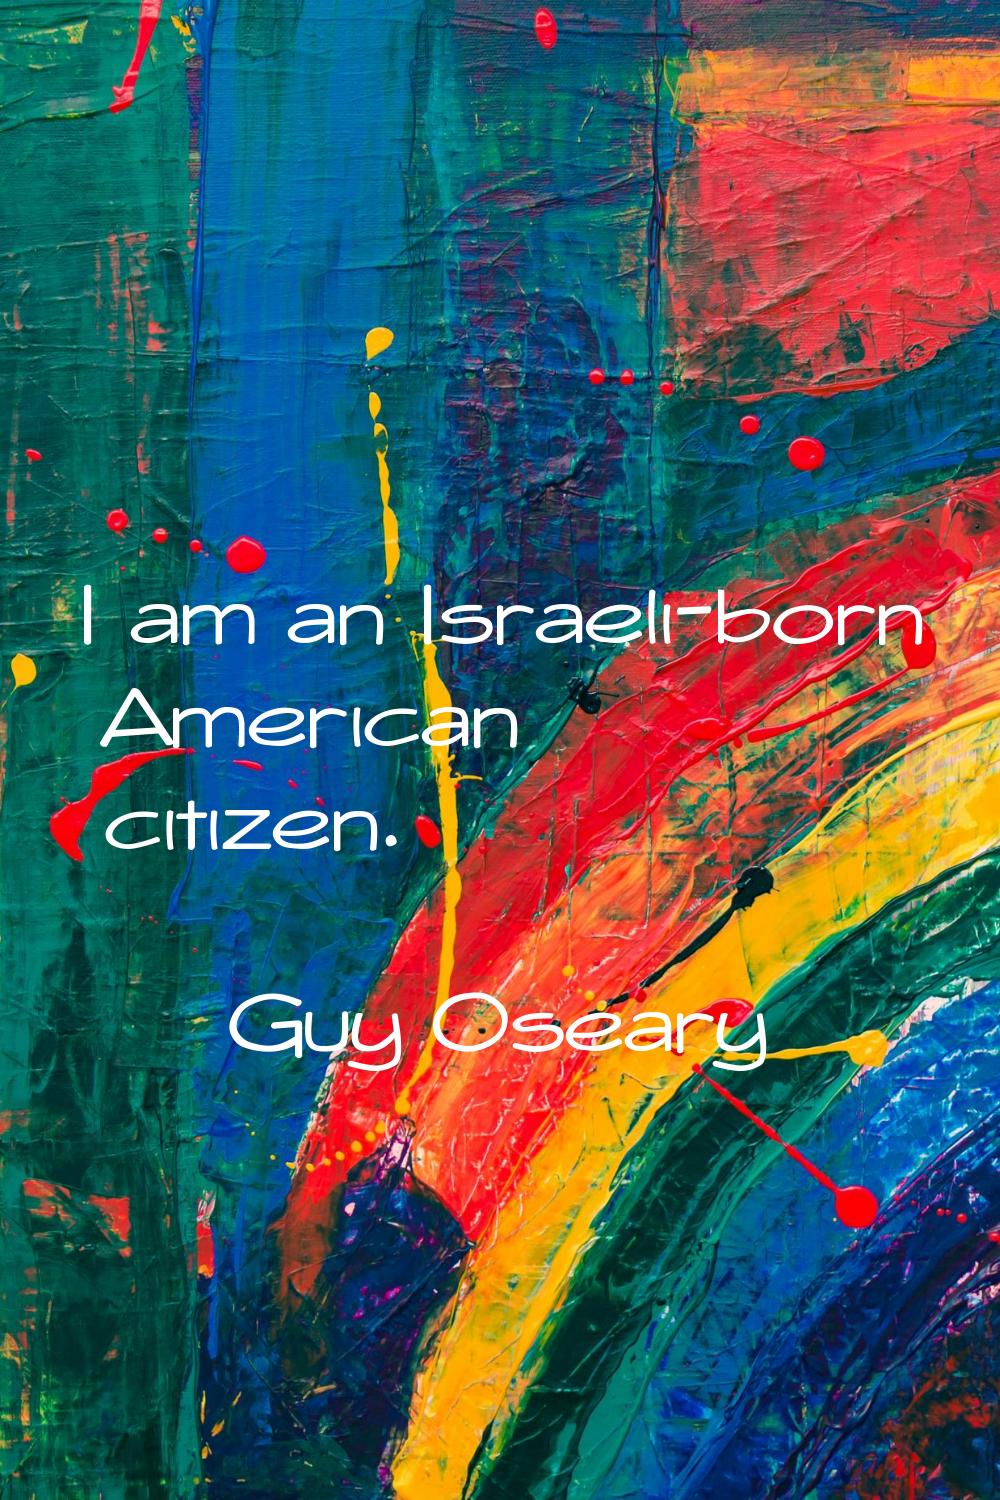 I am an Israeli-born American citizen.